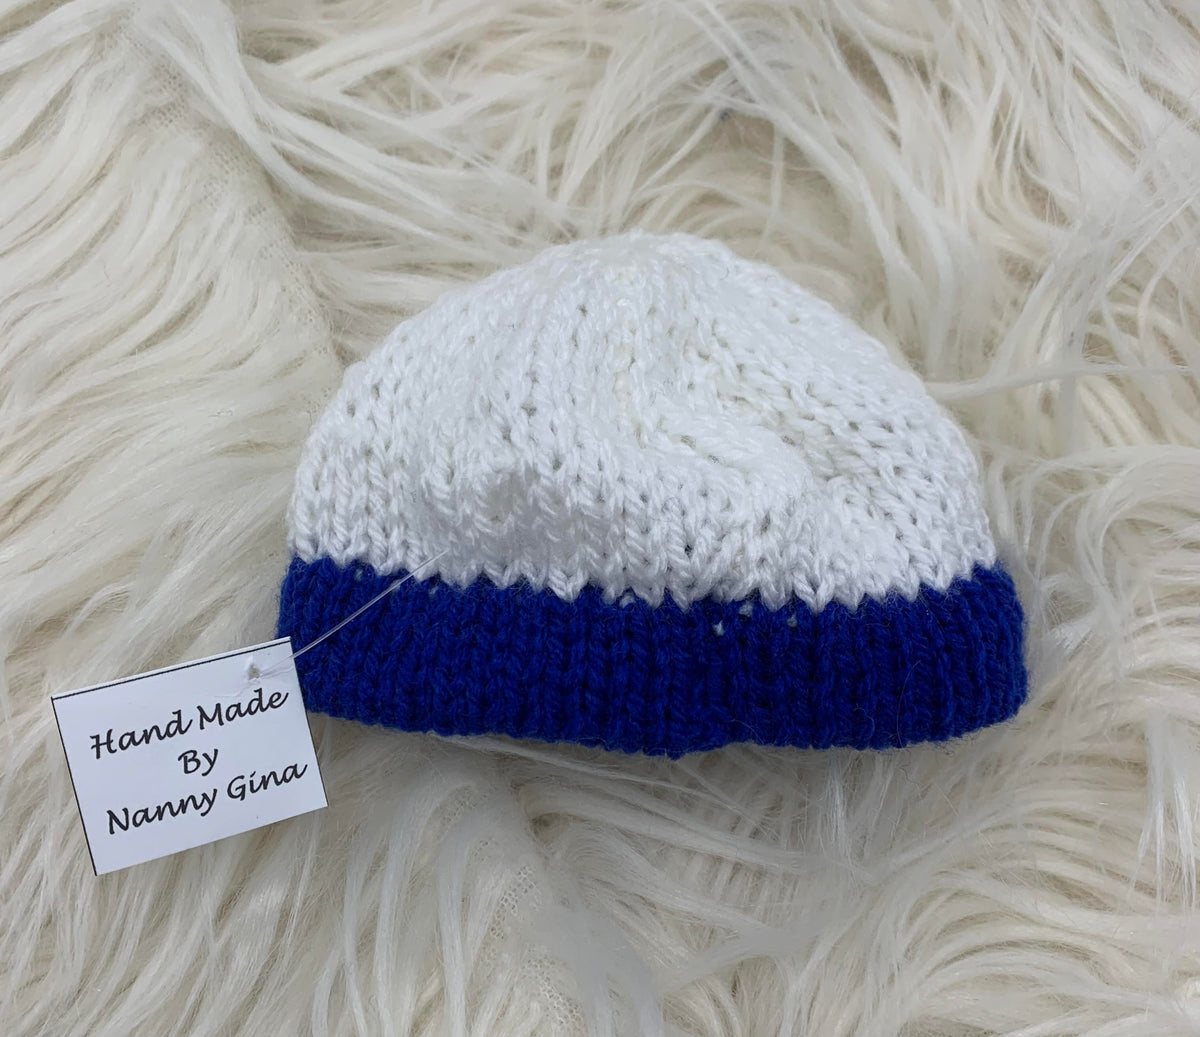 Hand Knitted HMS Sailor Hat for Teddy Bears – Alice's Bear Shop